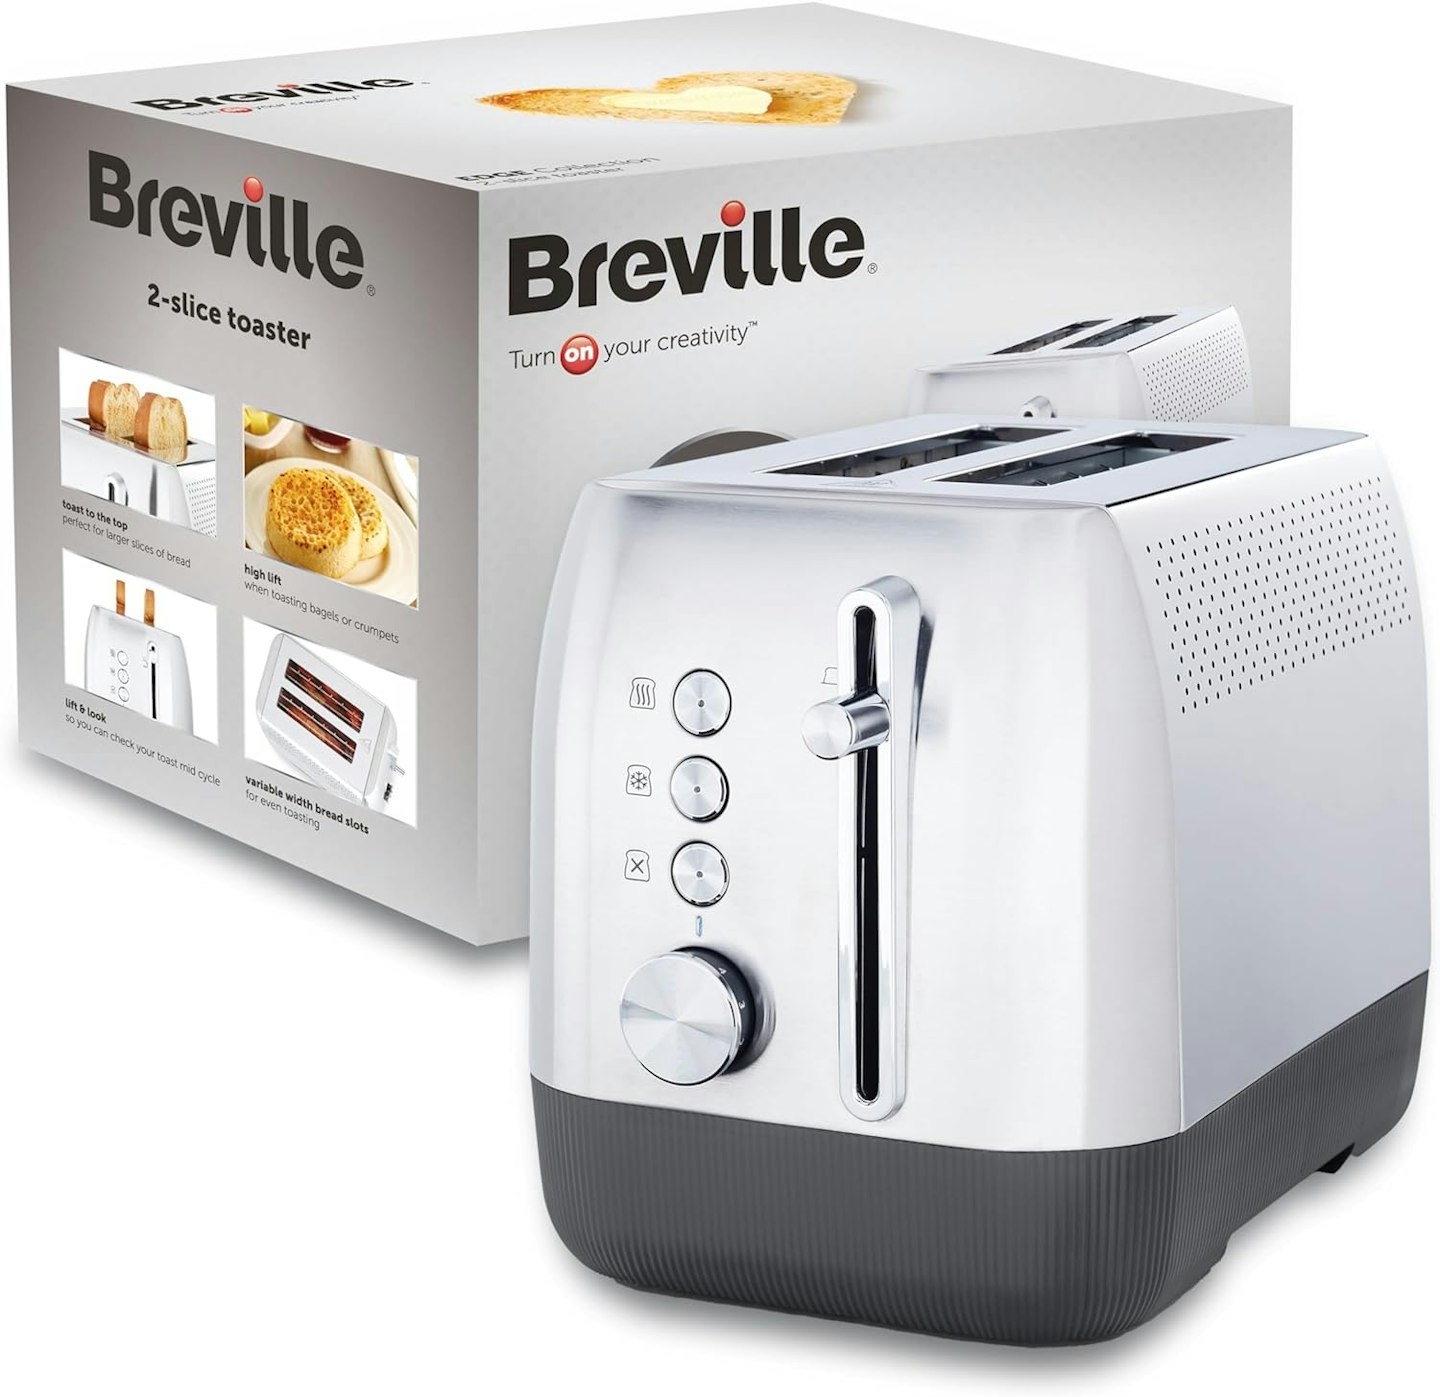 Breville - best energy efficient toaster